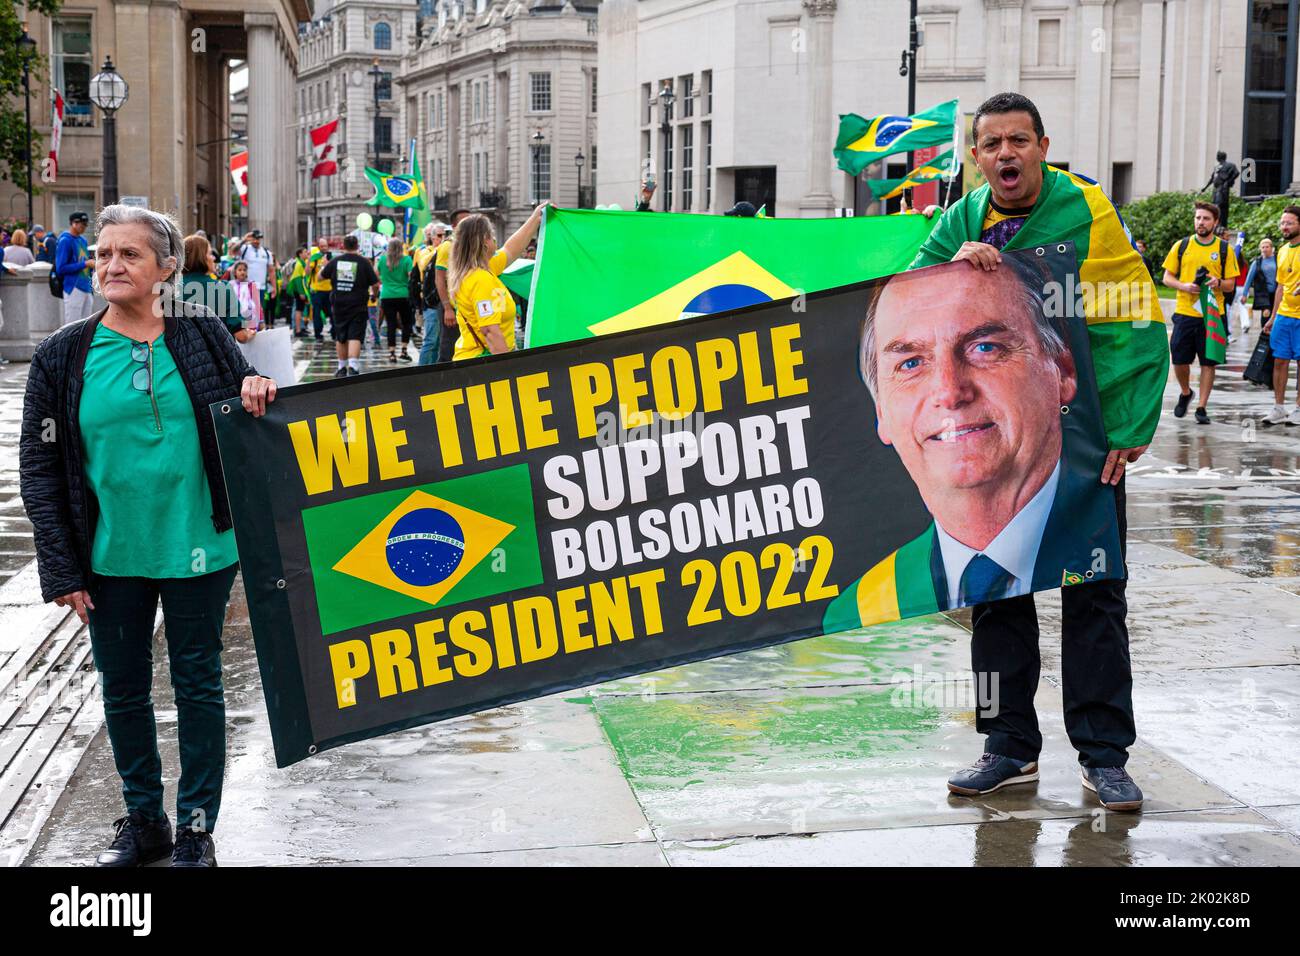 Rally supporting Brazilian President General Bolsonaro, Trafalgar Square, London September 2022 Stock Photo